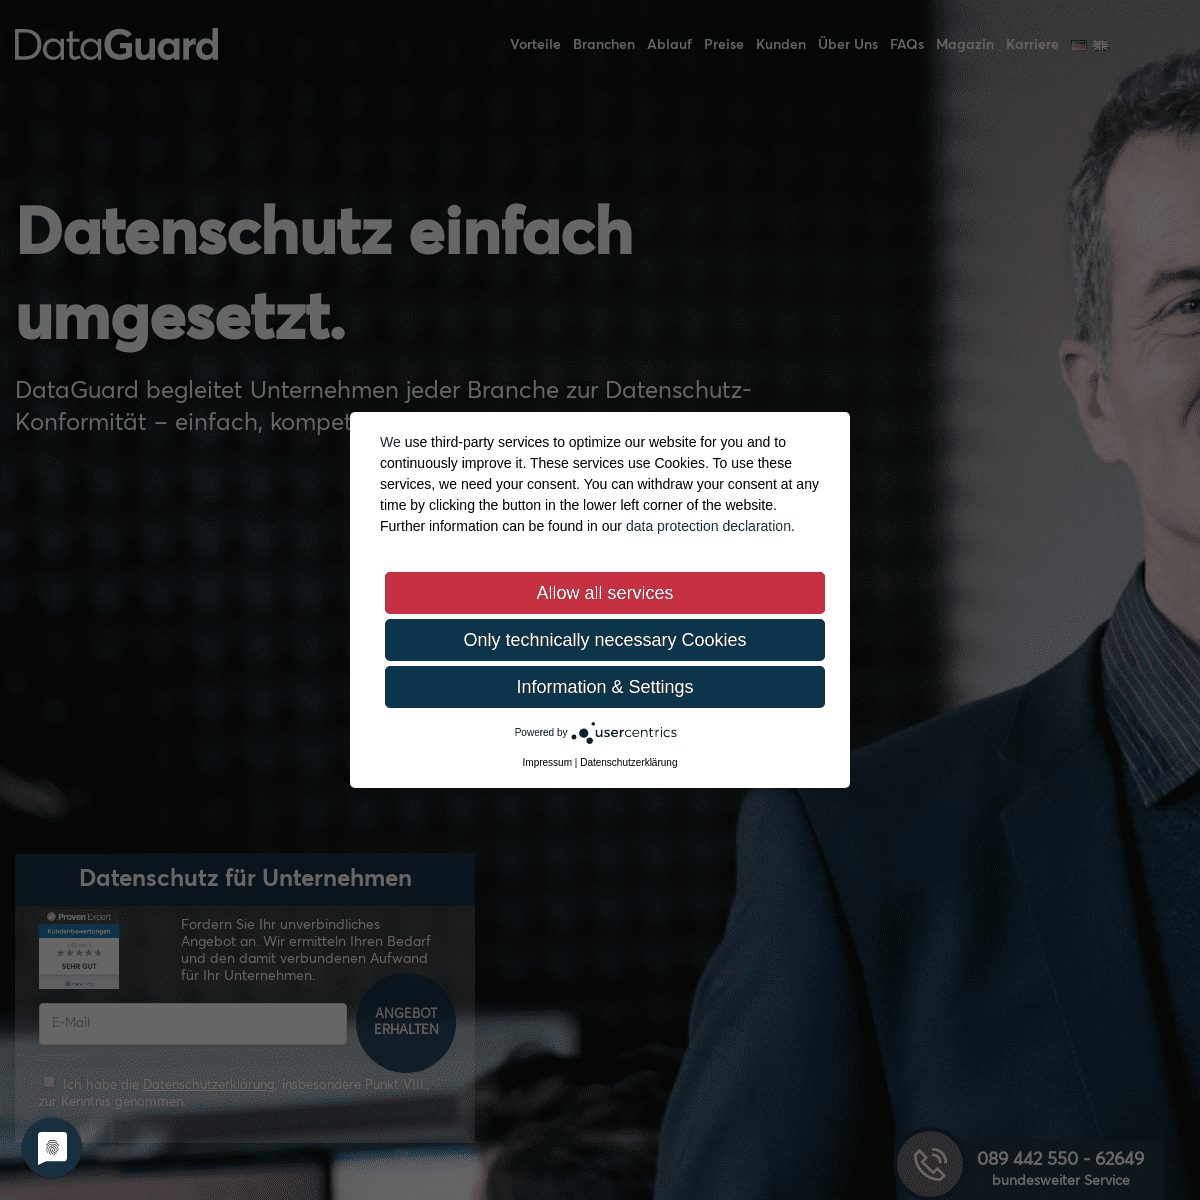 A complete backup of dataguard.de